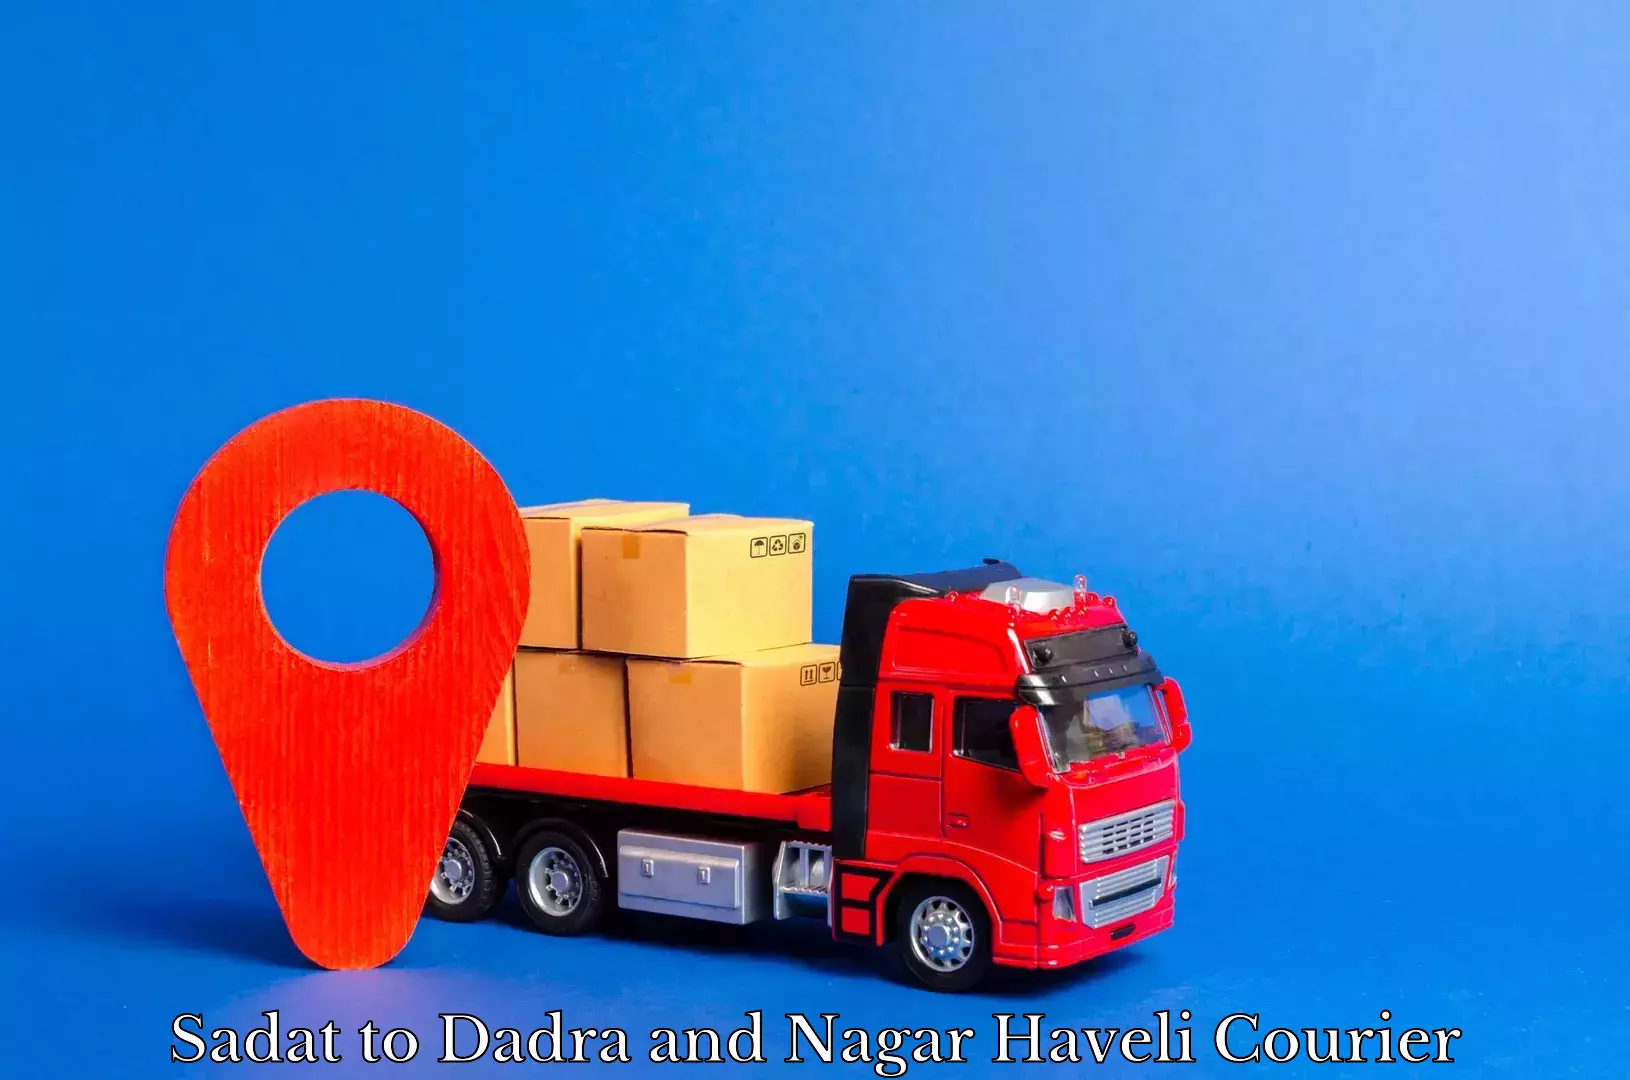 Express mail solutions Sadat to Dadra and Nagar Haveli